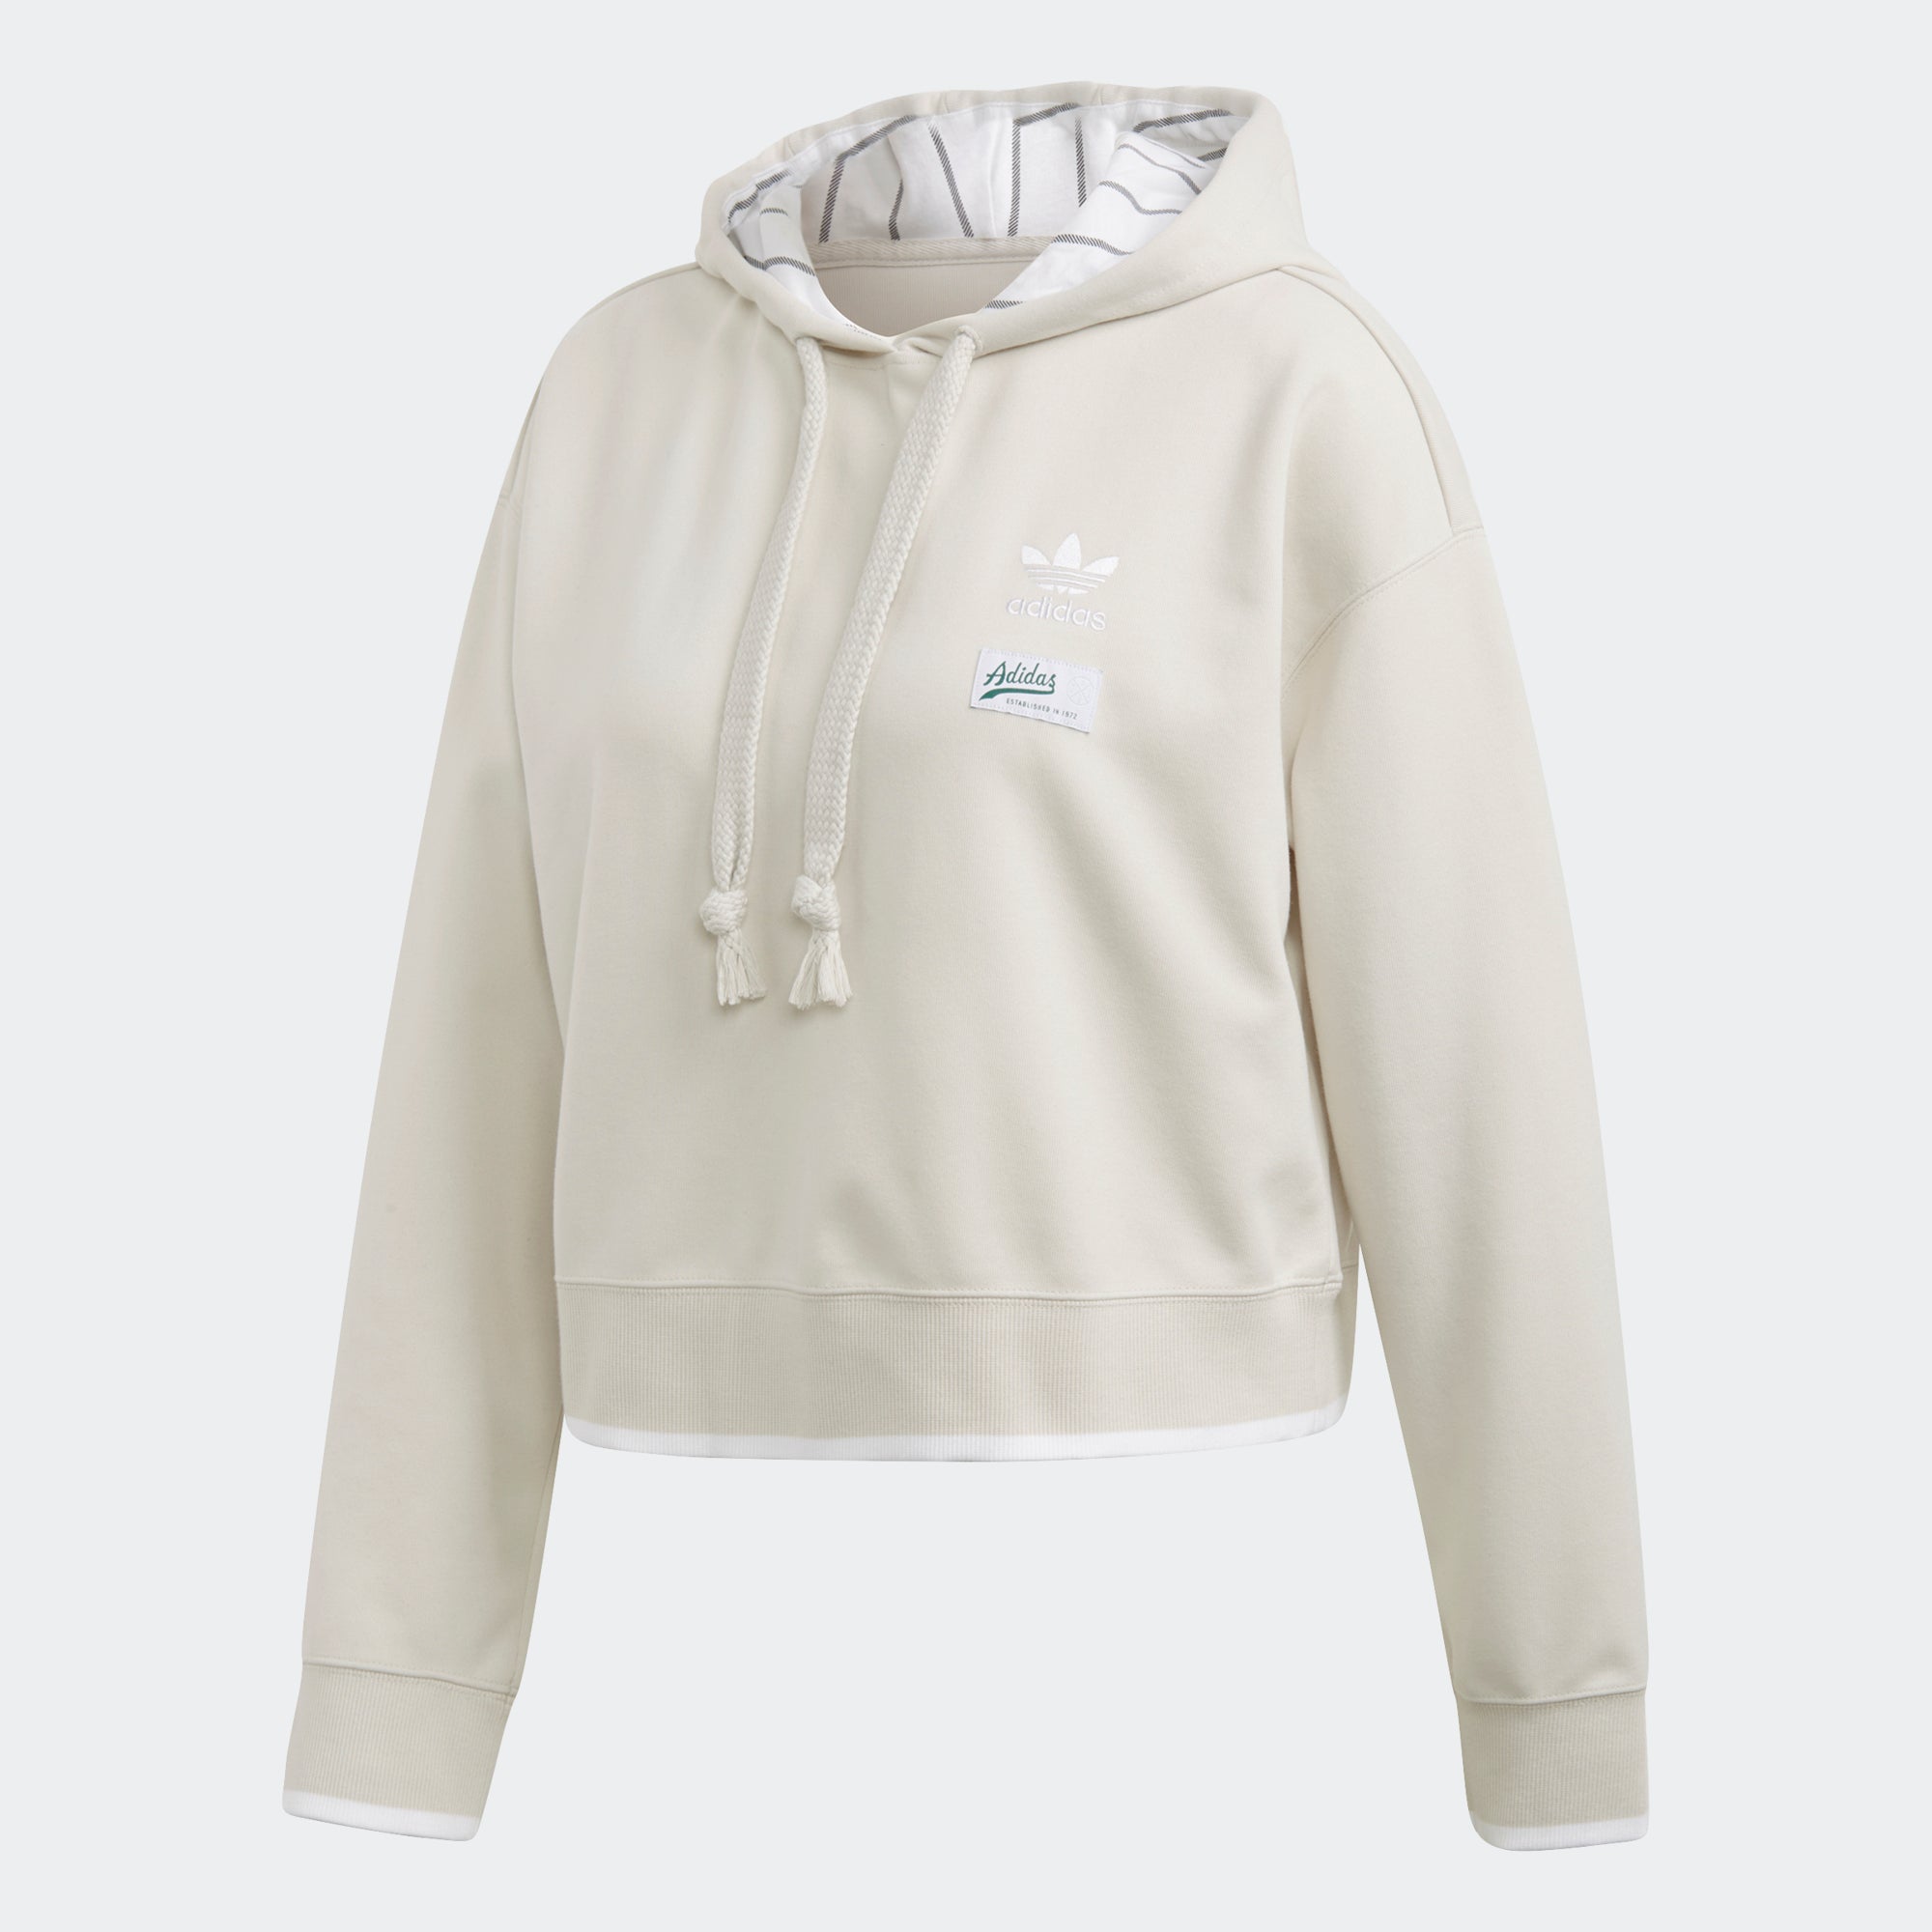 adidas women's white cropped hoodie